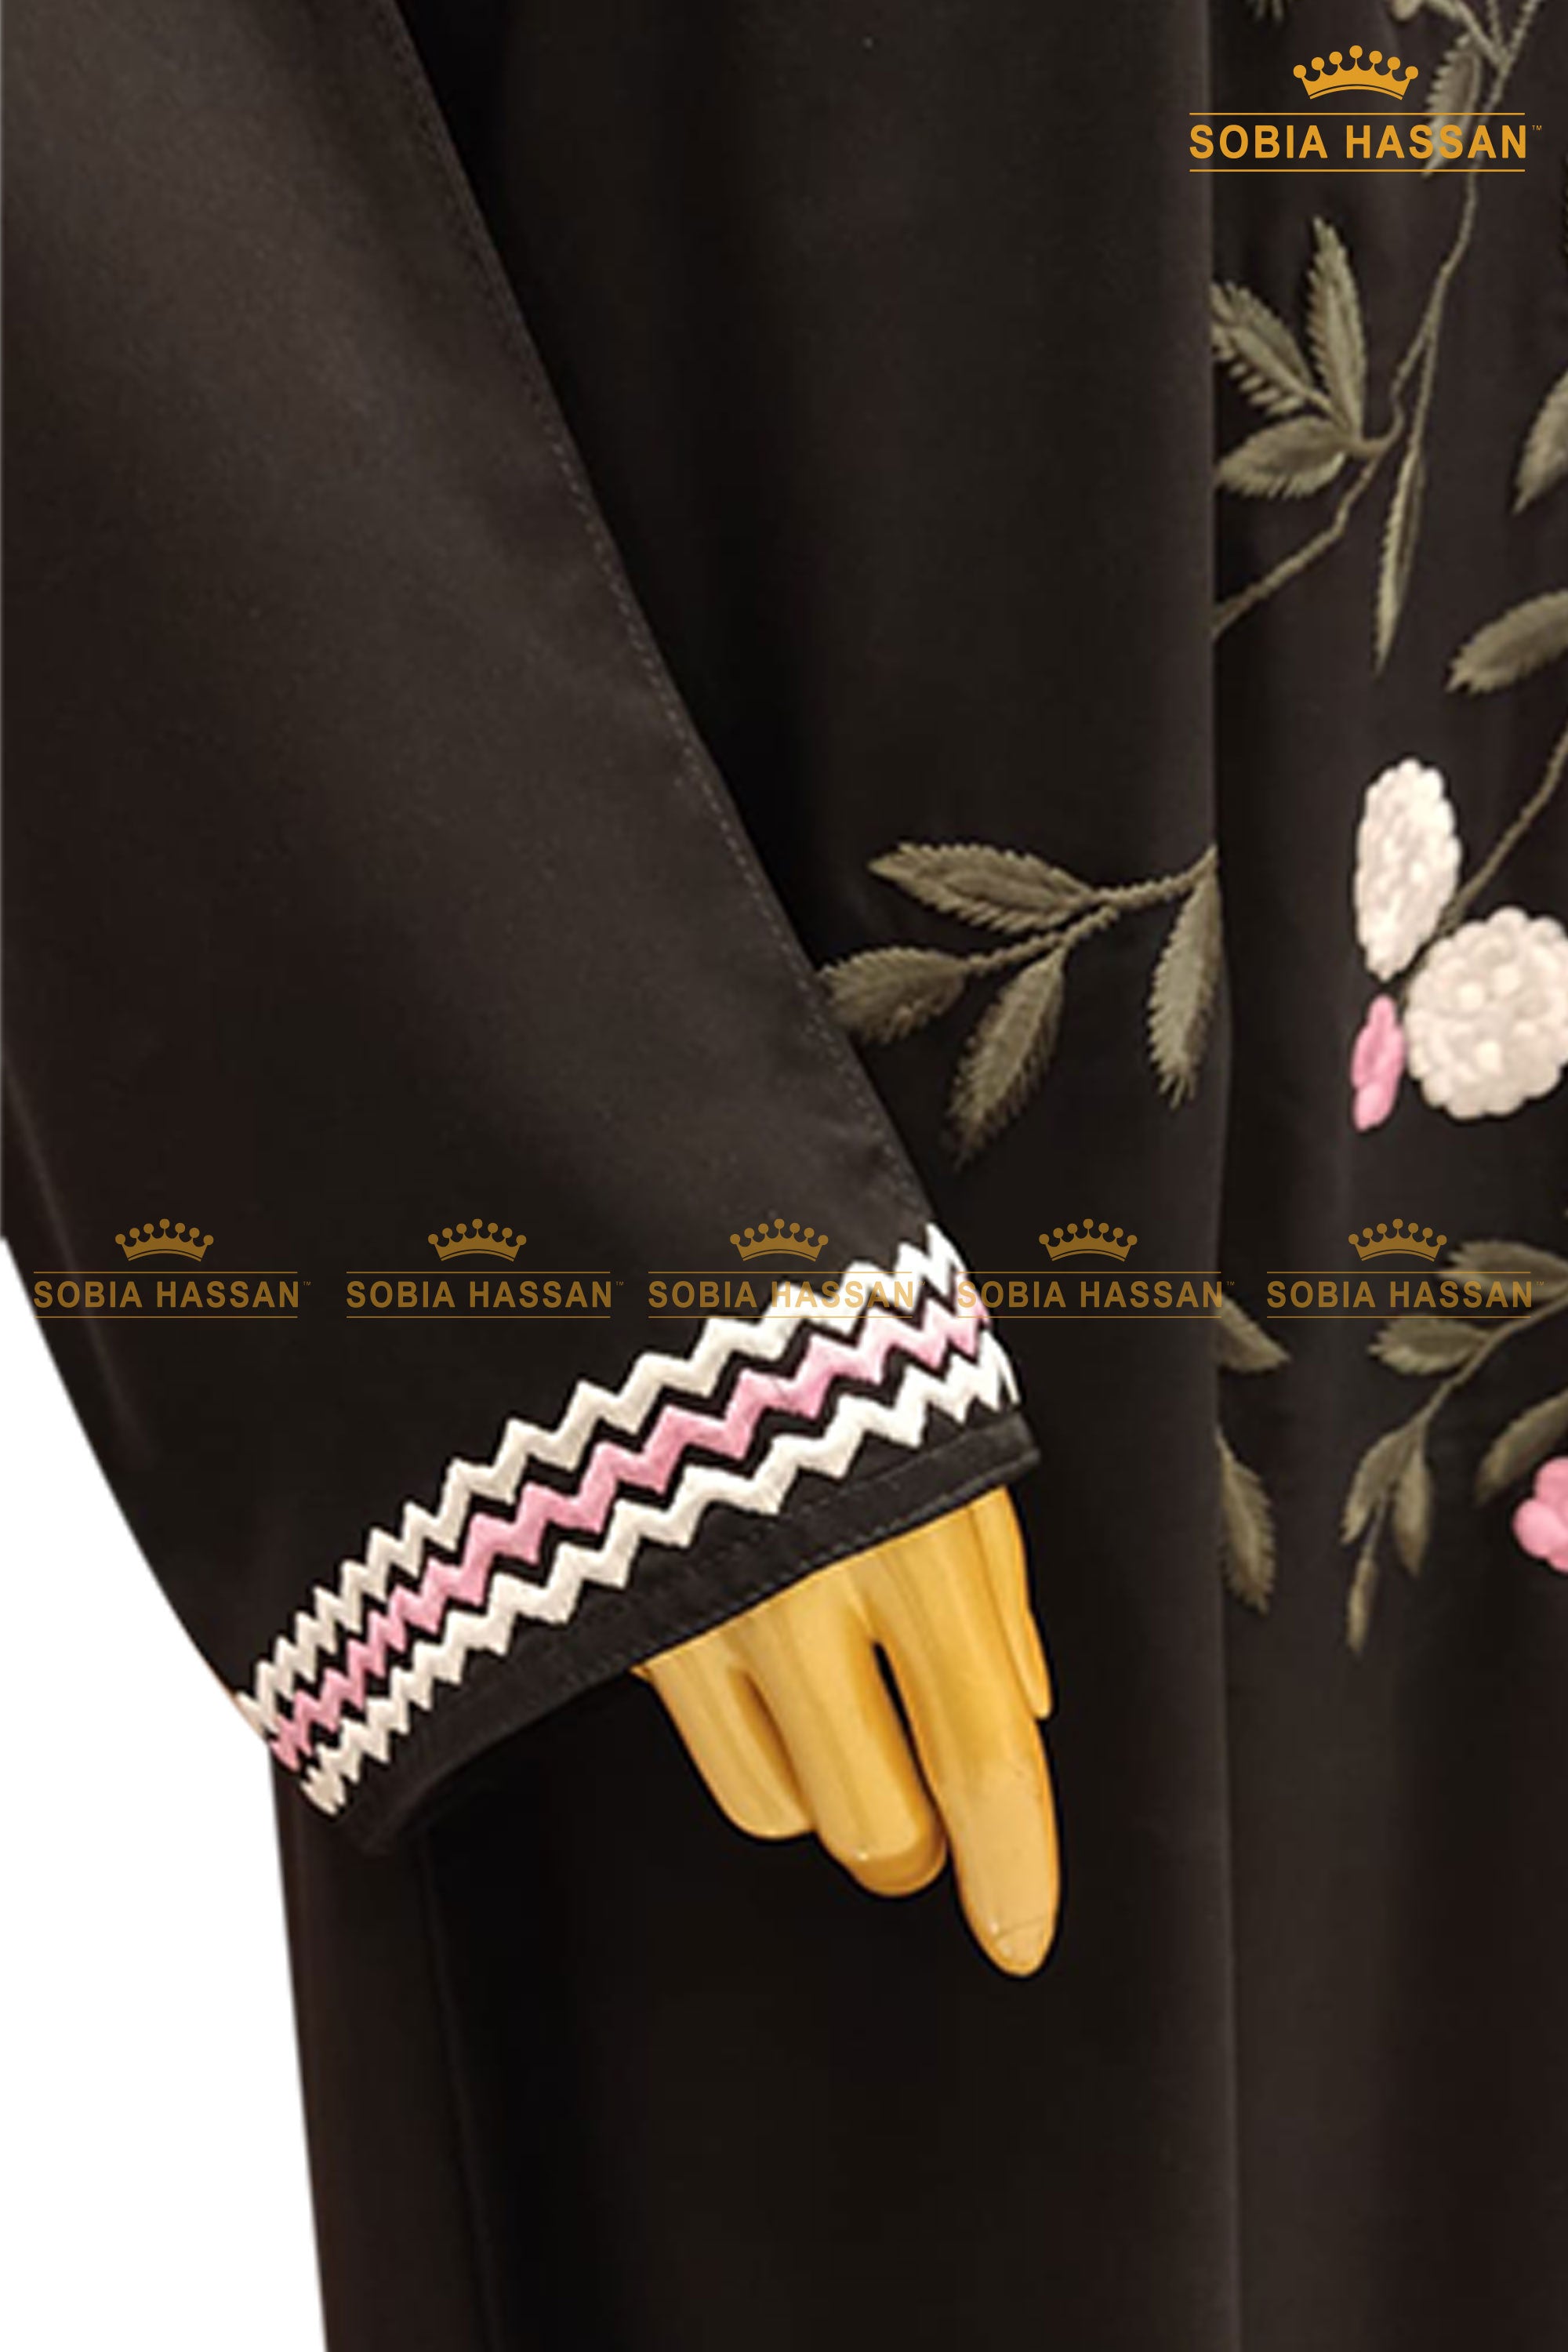 Flower Embroidered Abaya